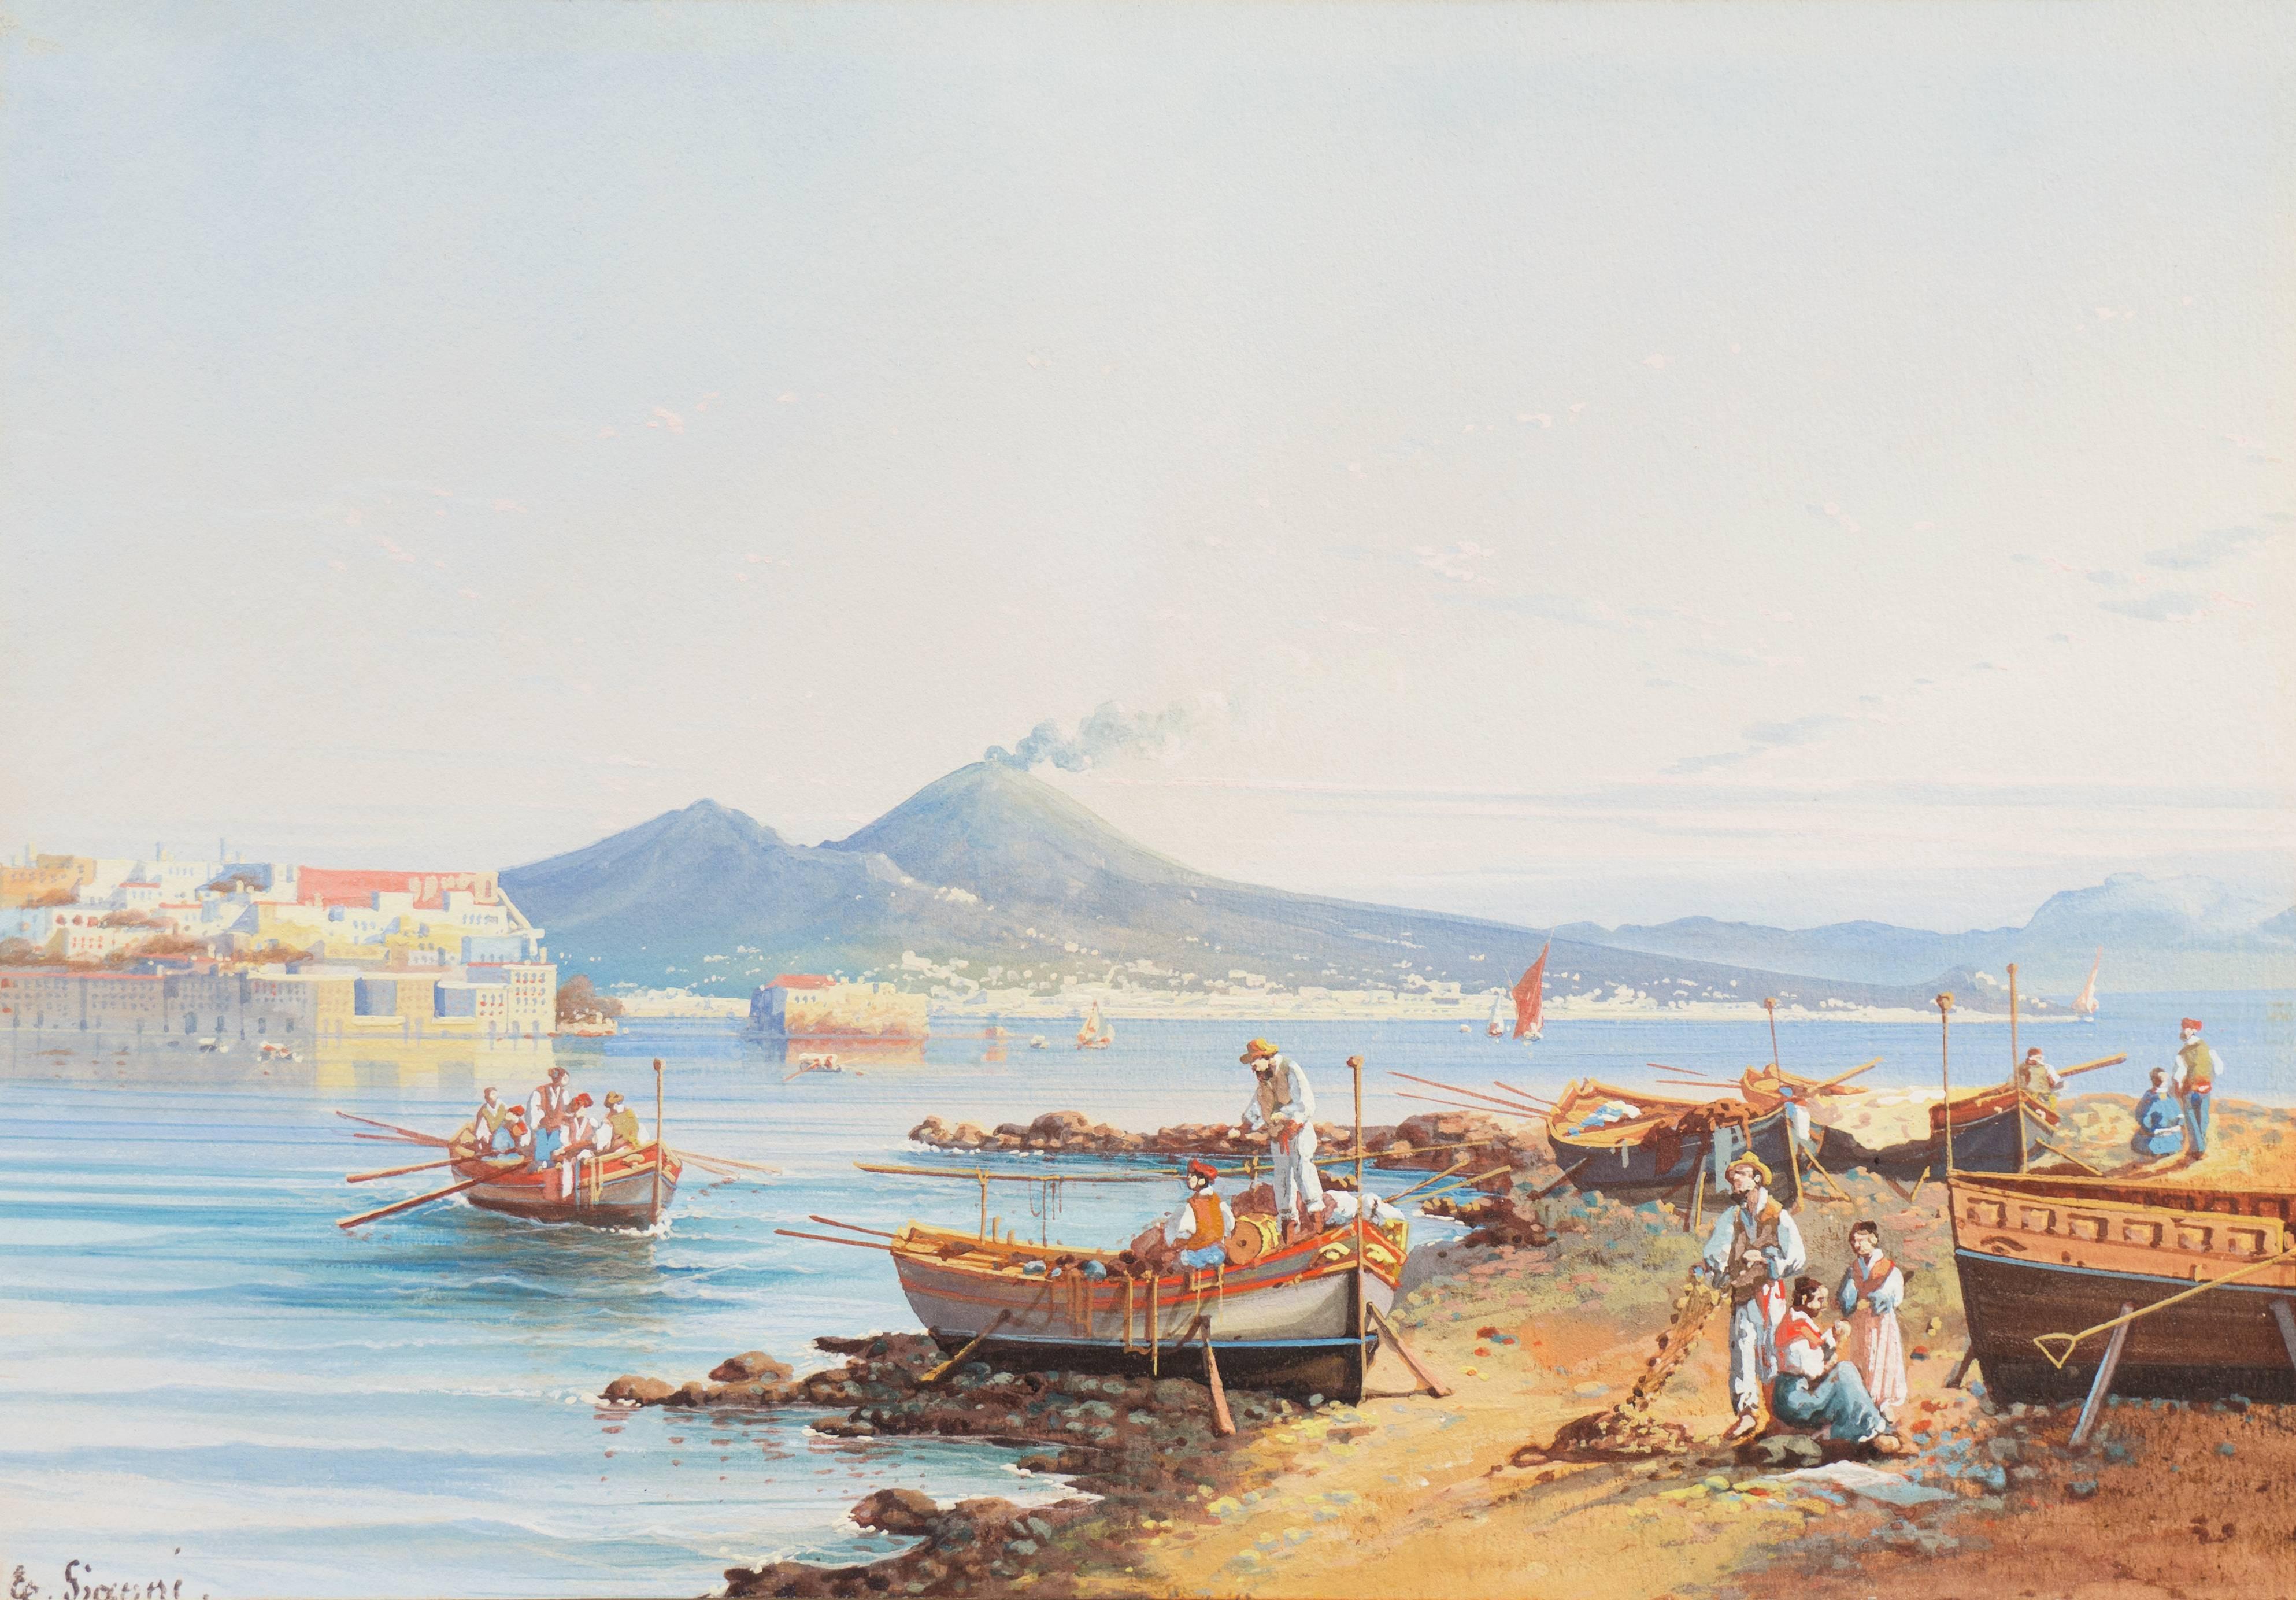 The Bay of Naples with Vesuvius